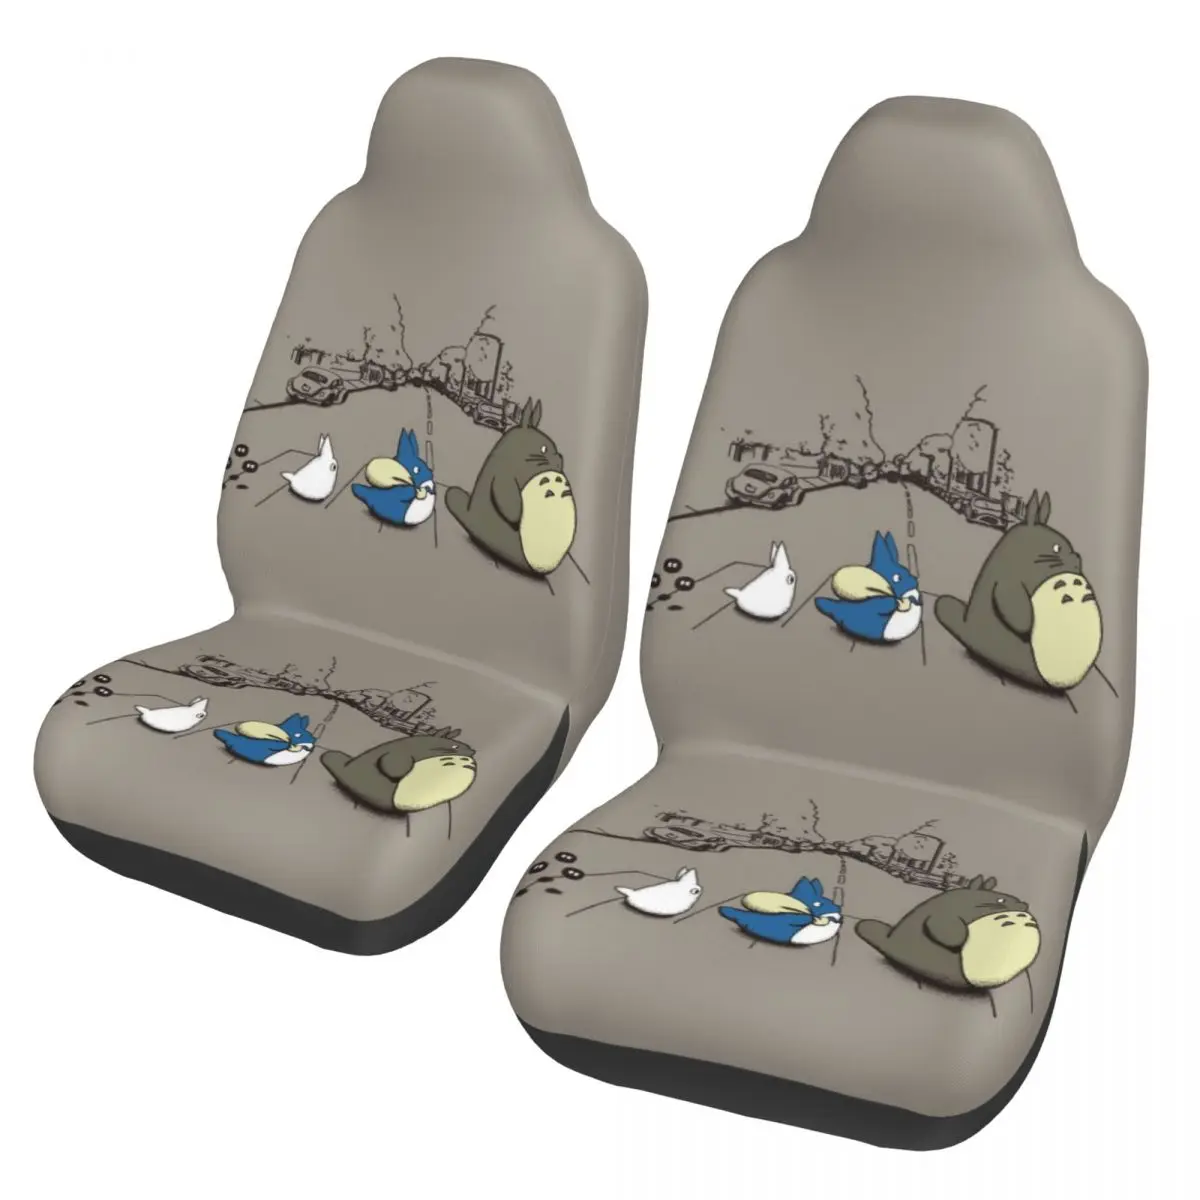 

Studio Ghibli Anime My Neighbor Totoro Car Seat Covers Universal for Cars SUV Van Hayao Miyazaki Bucket Seats Protector Covers